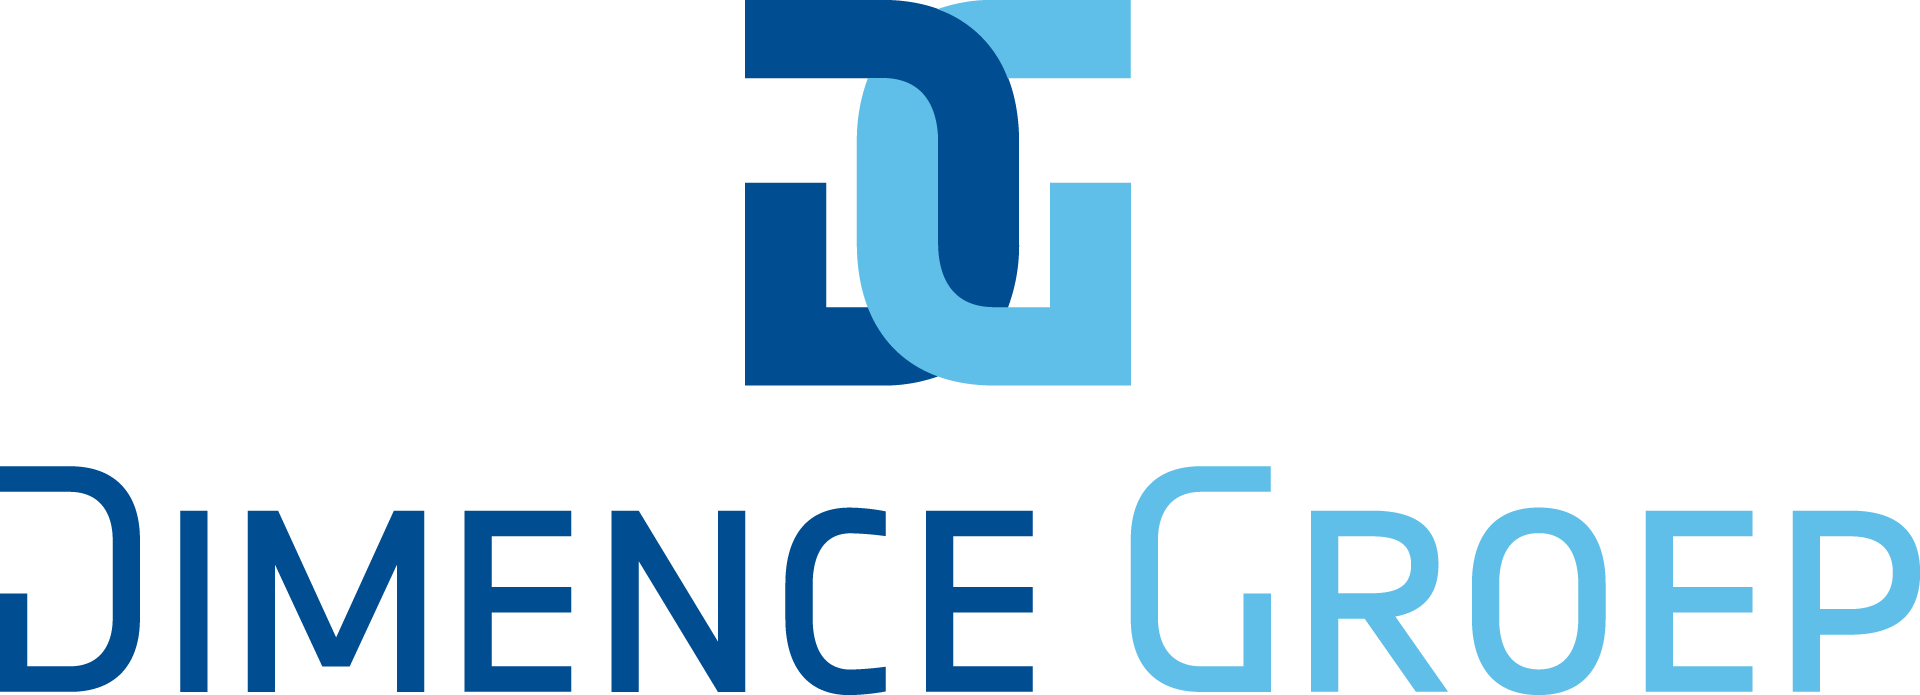 Dimence Groep logo